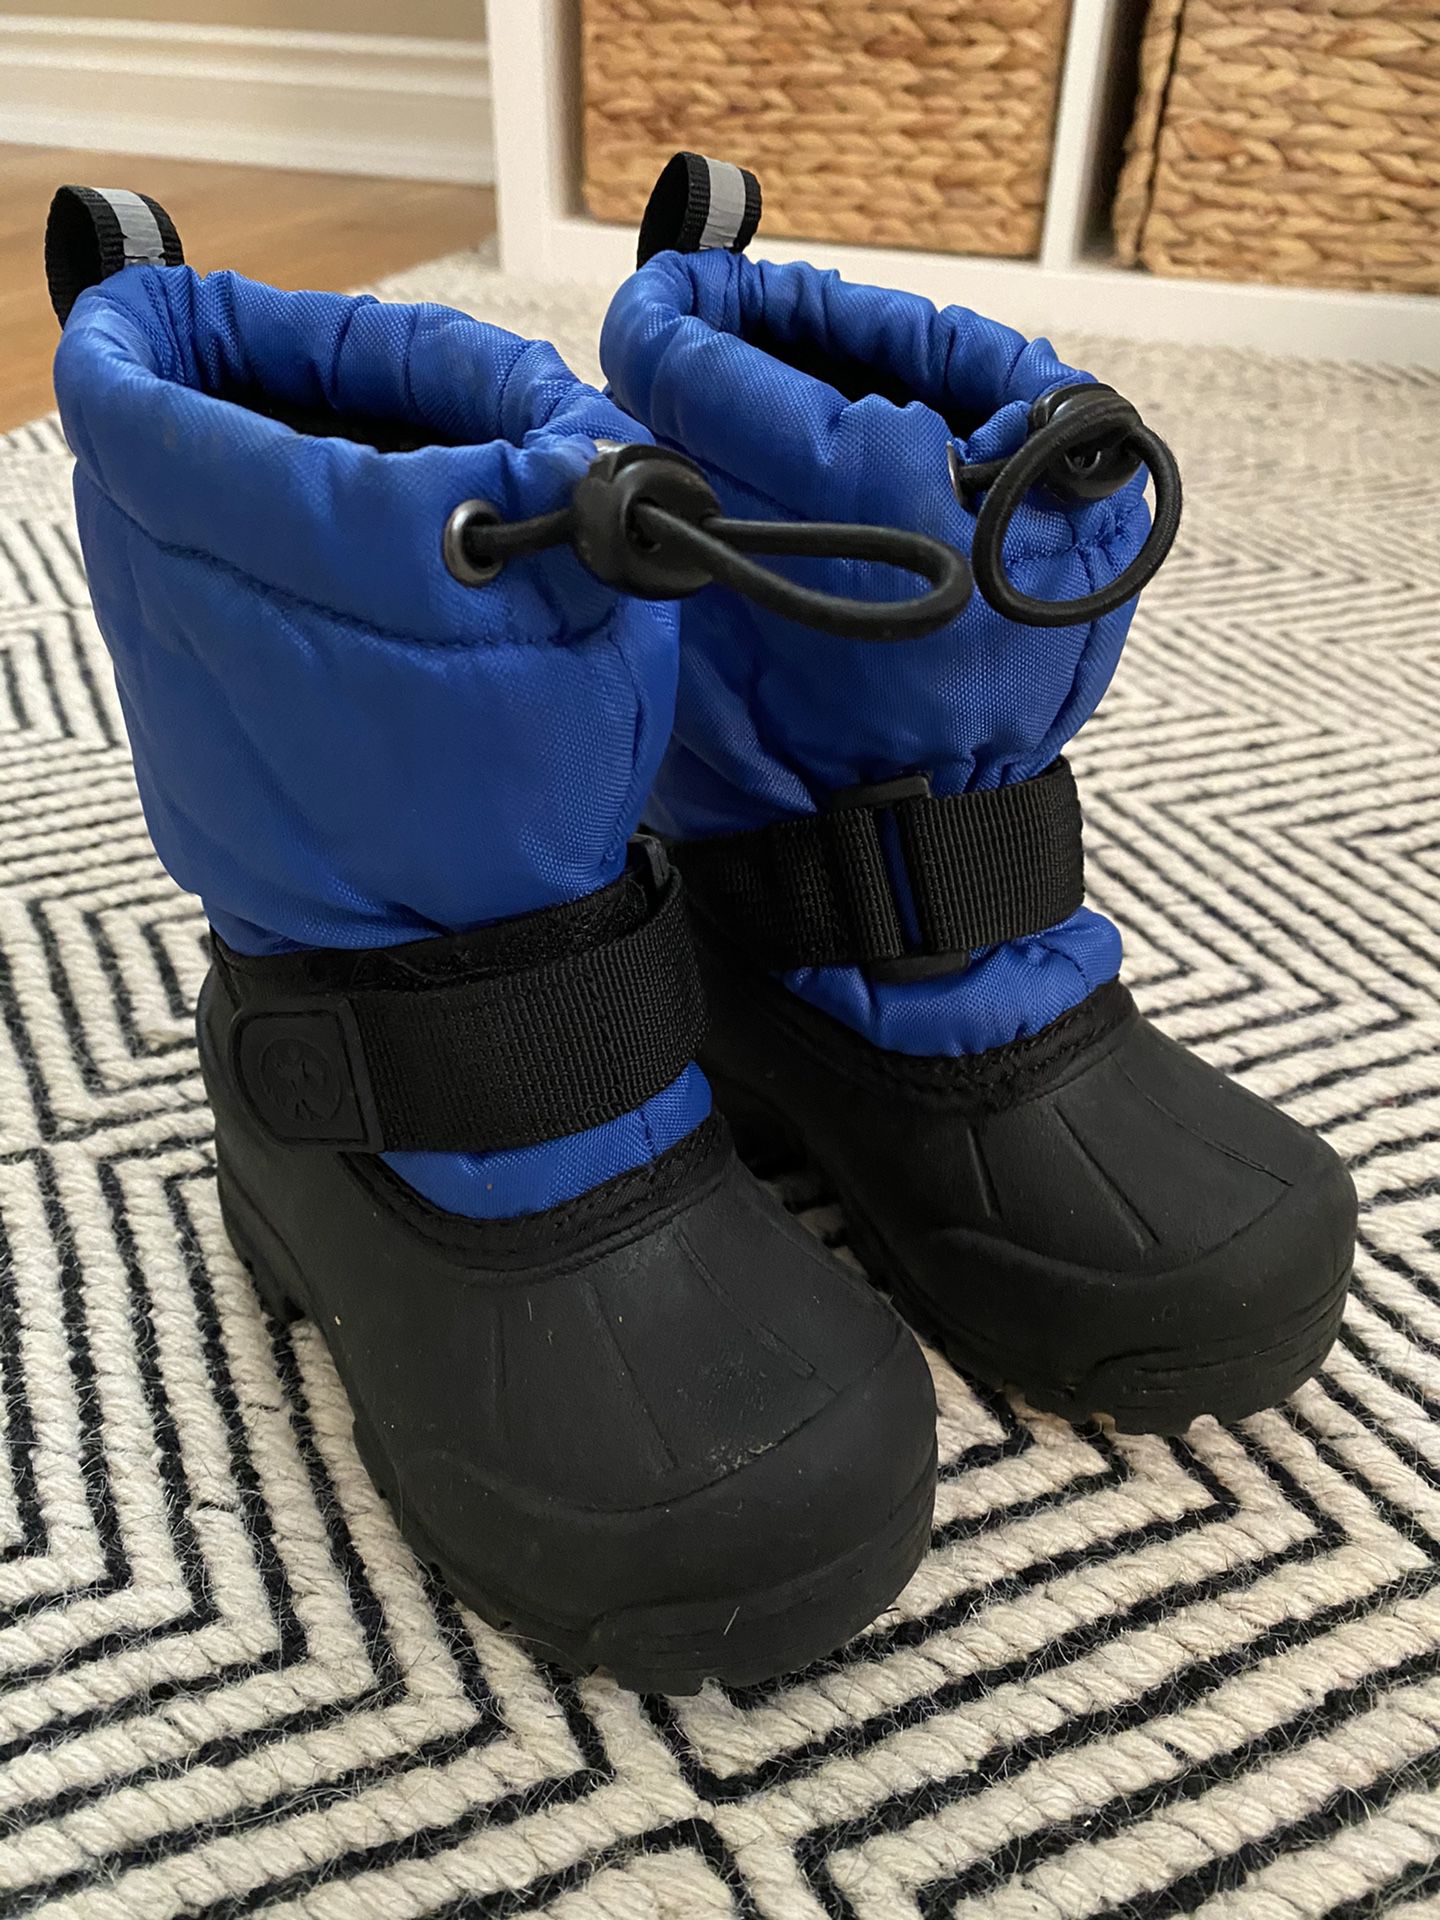 Northside Kids Snow boots - 5T